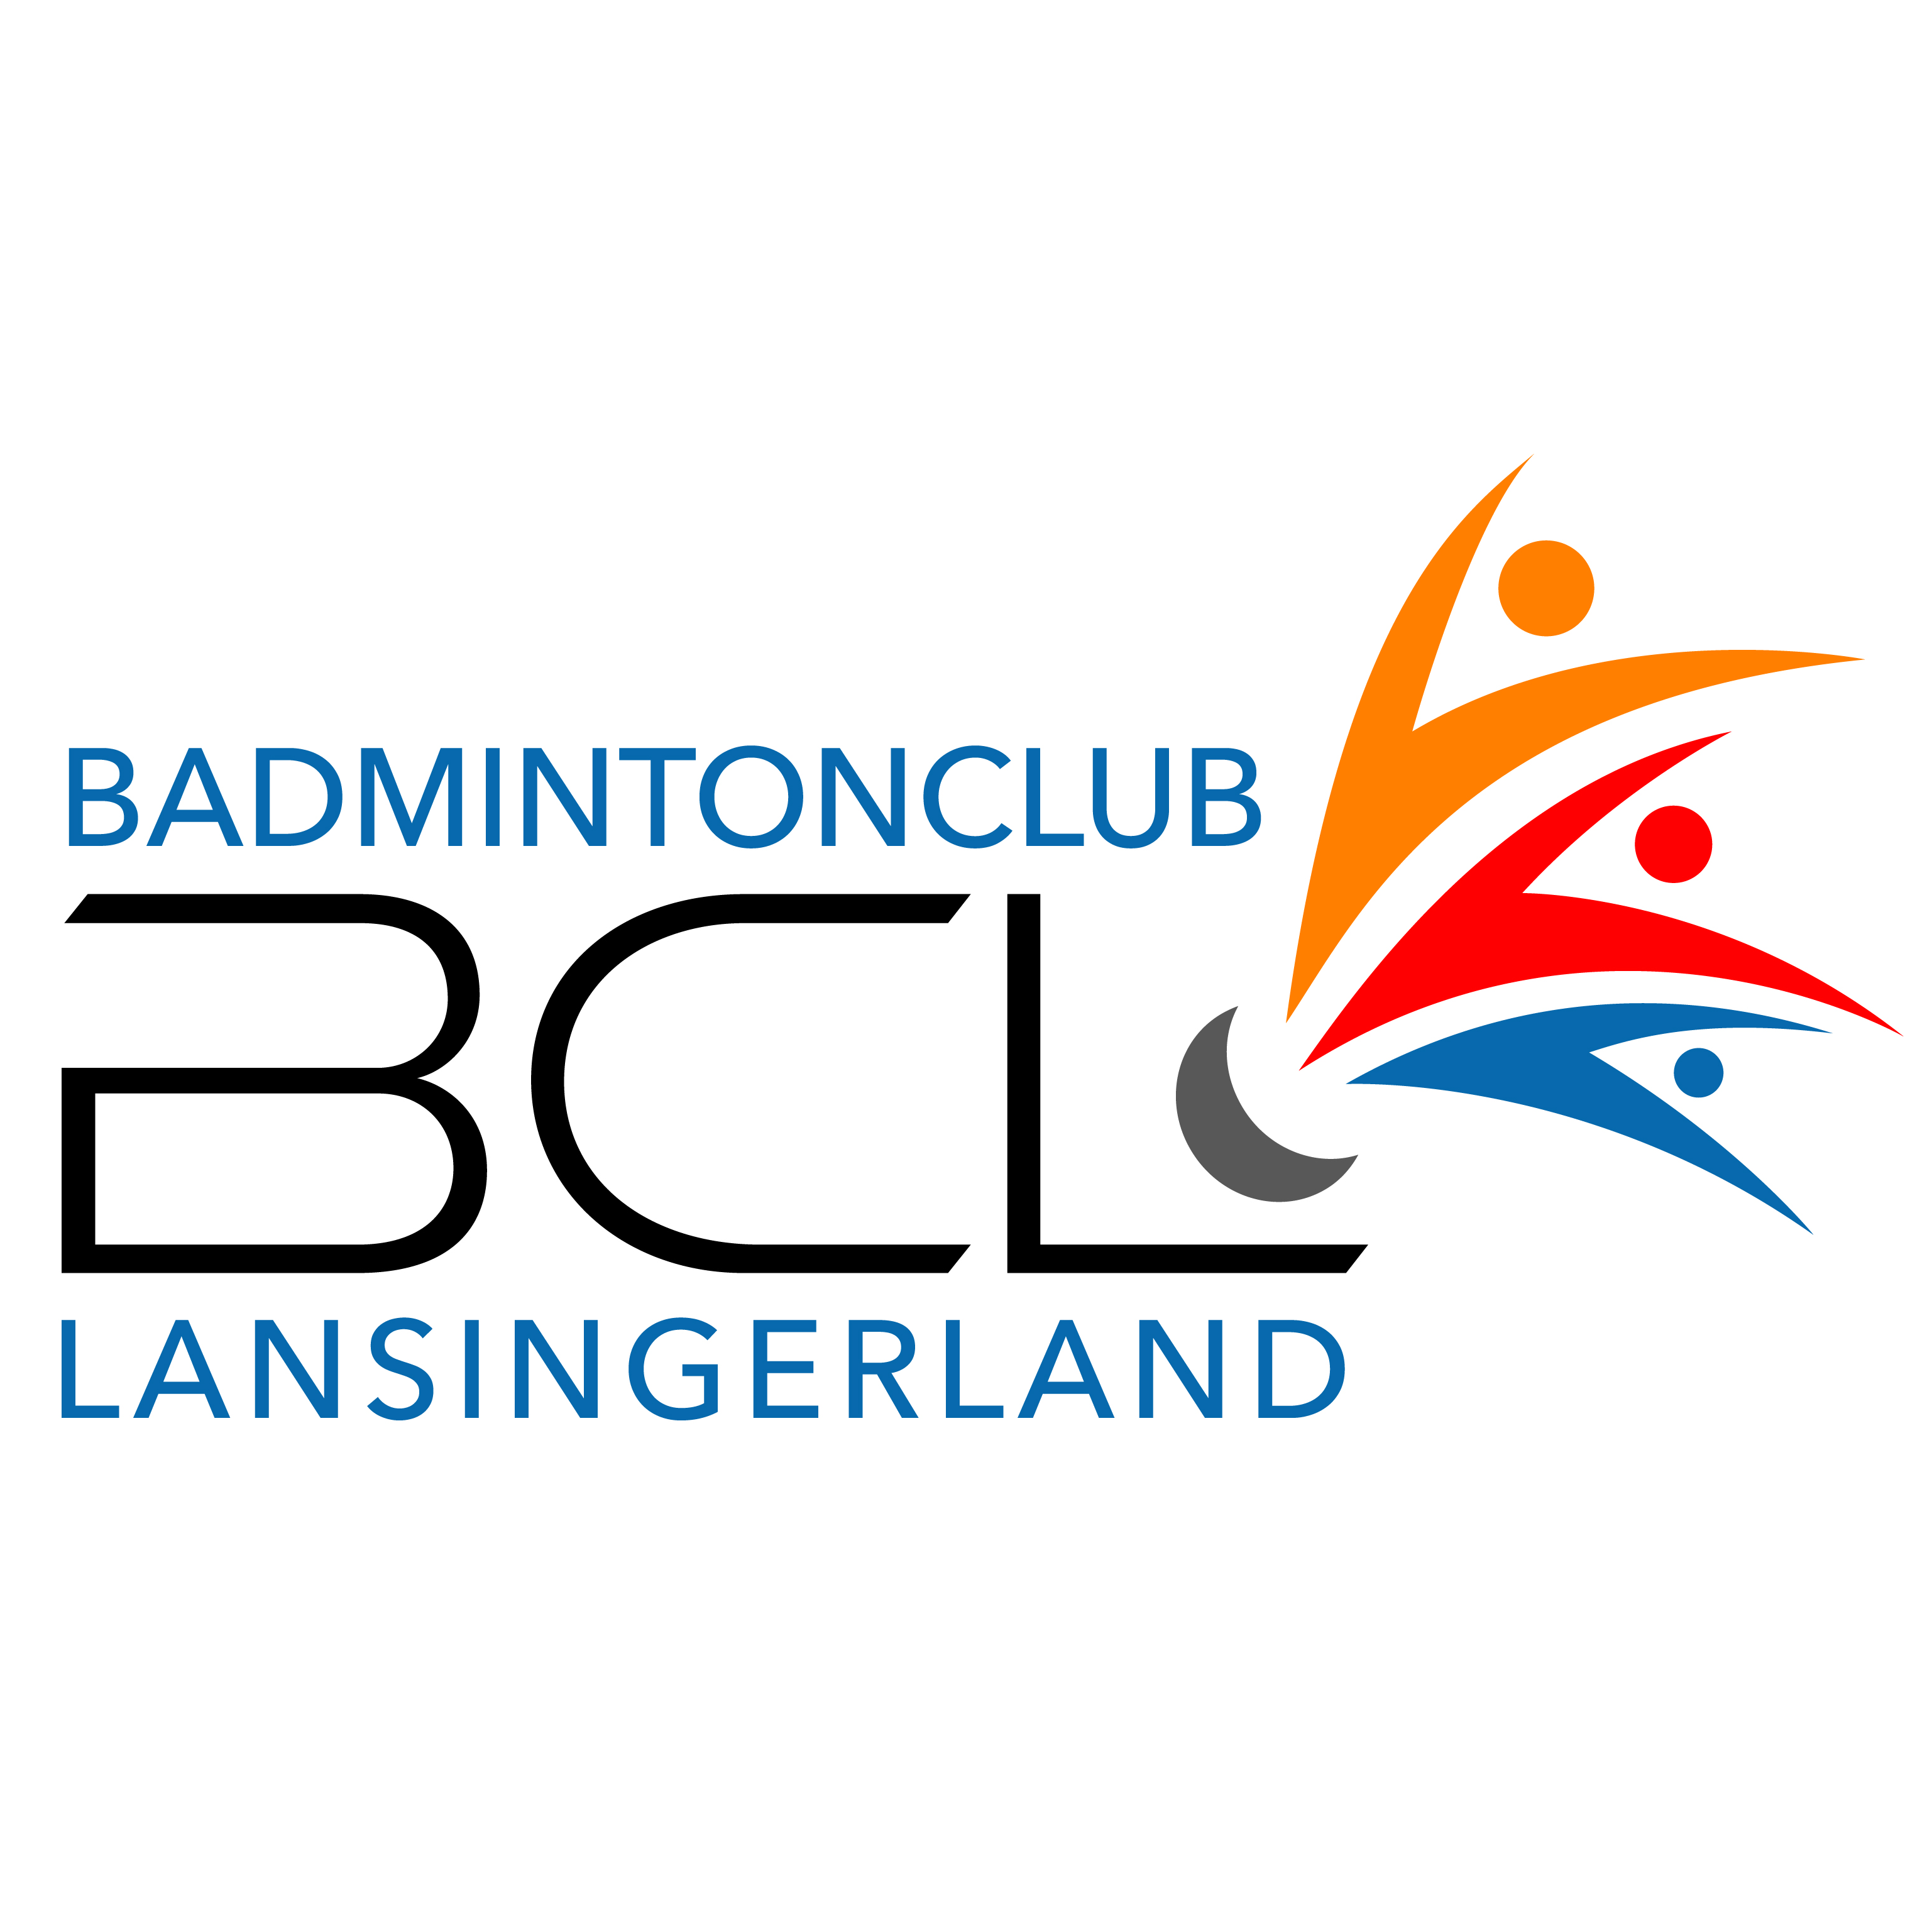 Badmintonclub Lansingerland